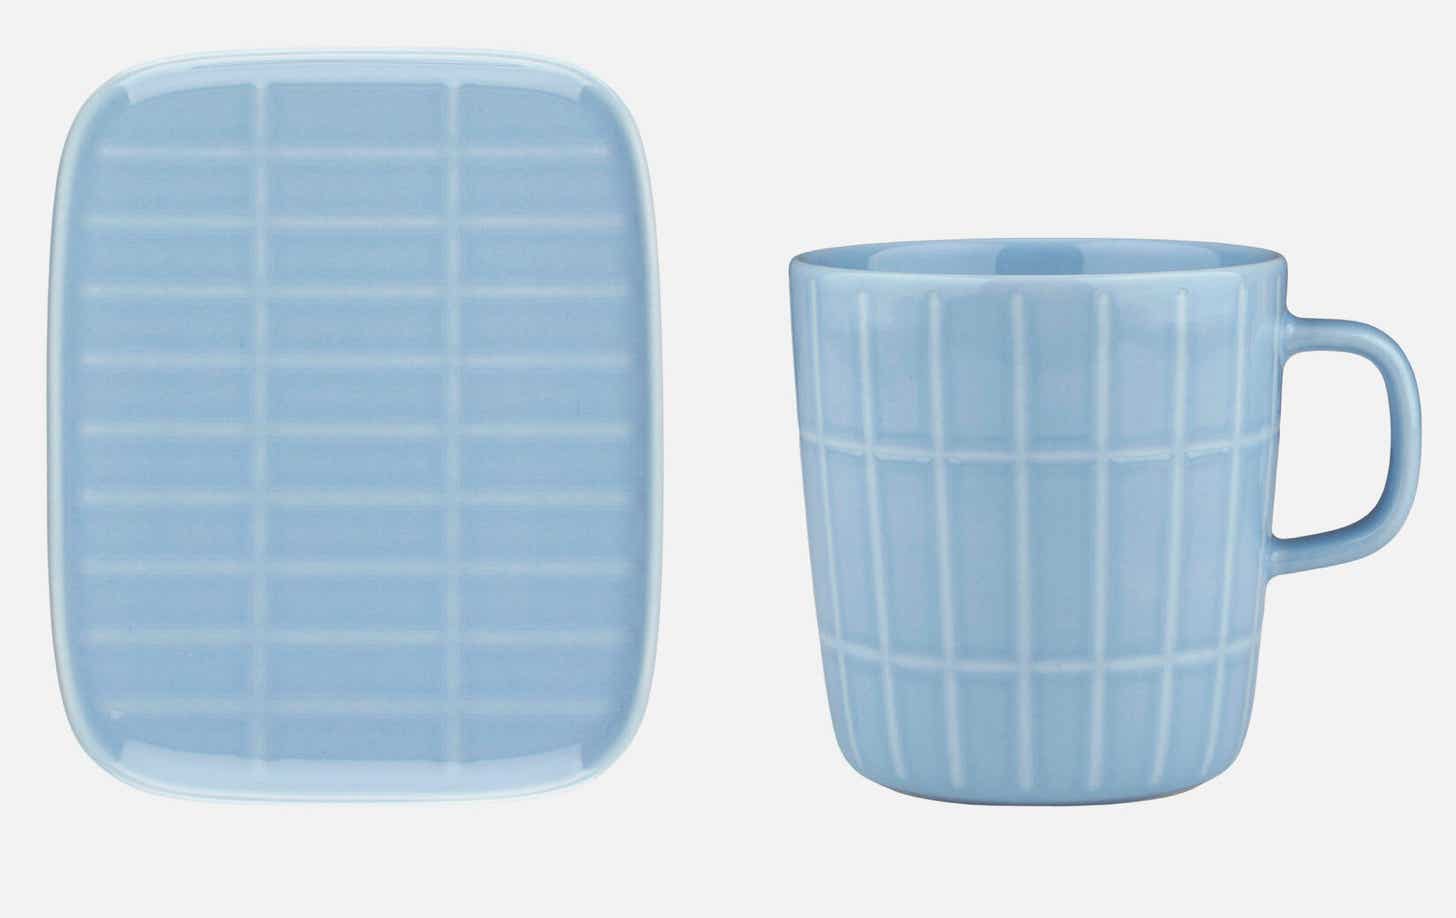 Tiiliskivi set – mug 4 dl and plate 15 x 12 cm